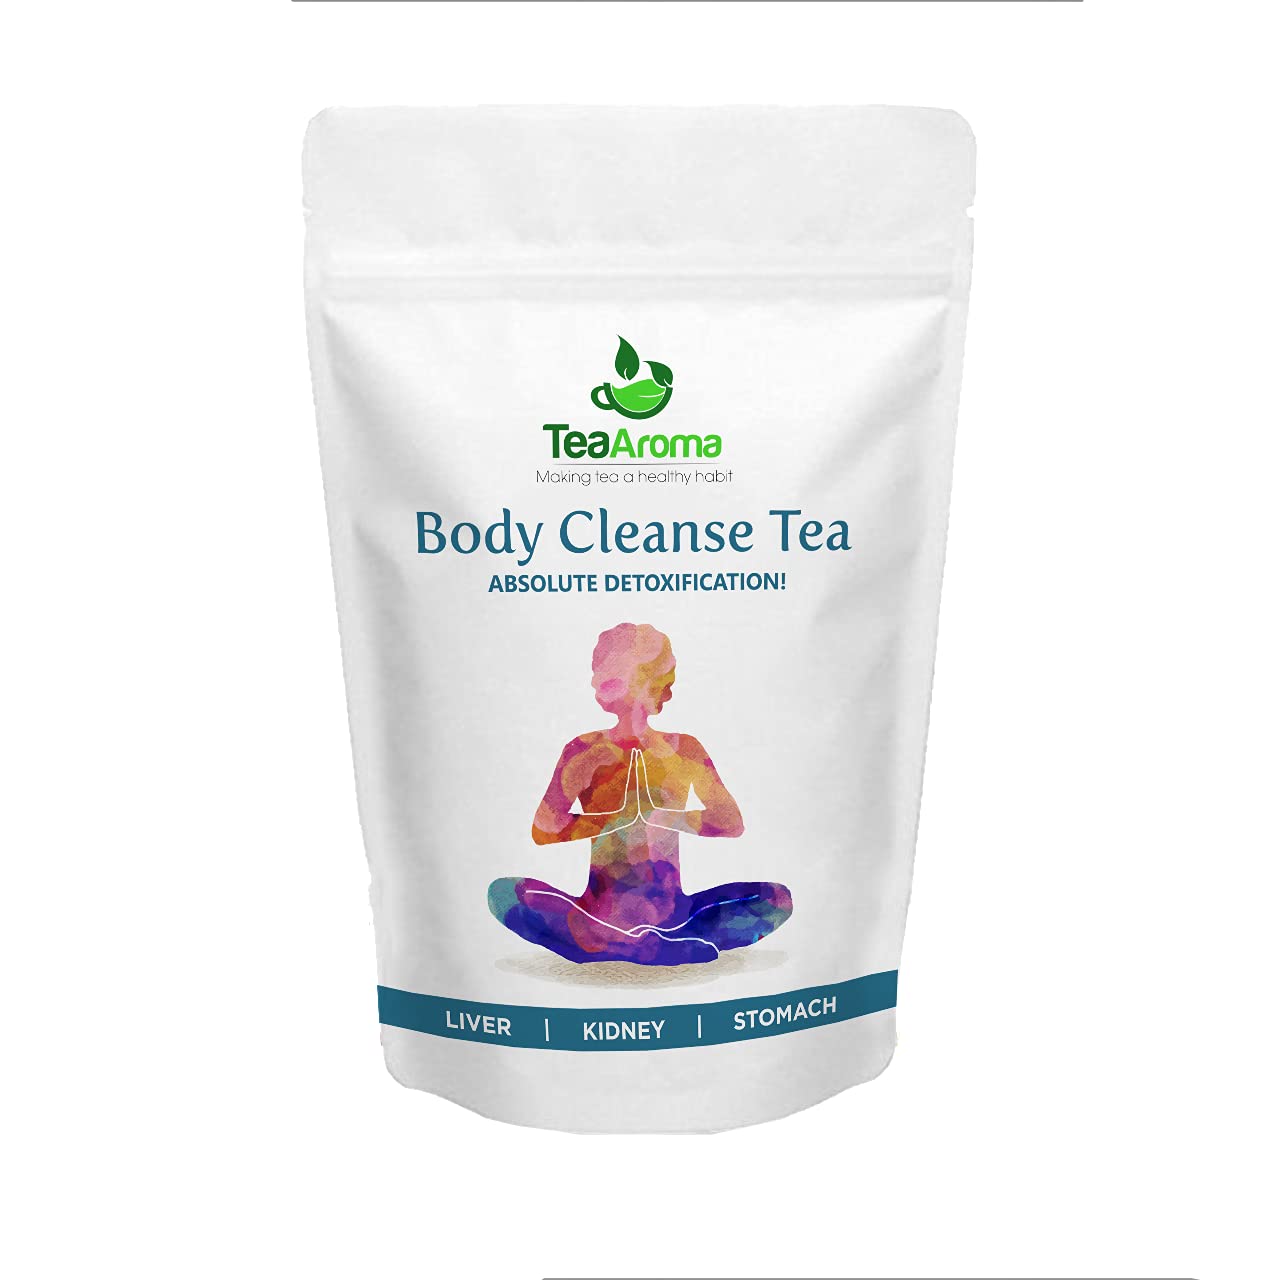 Tea Aroma Body Cleanse Tea Image